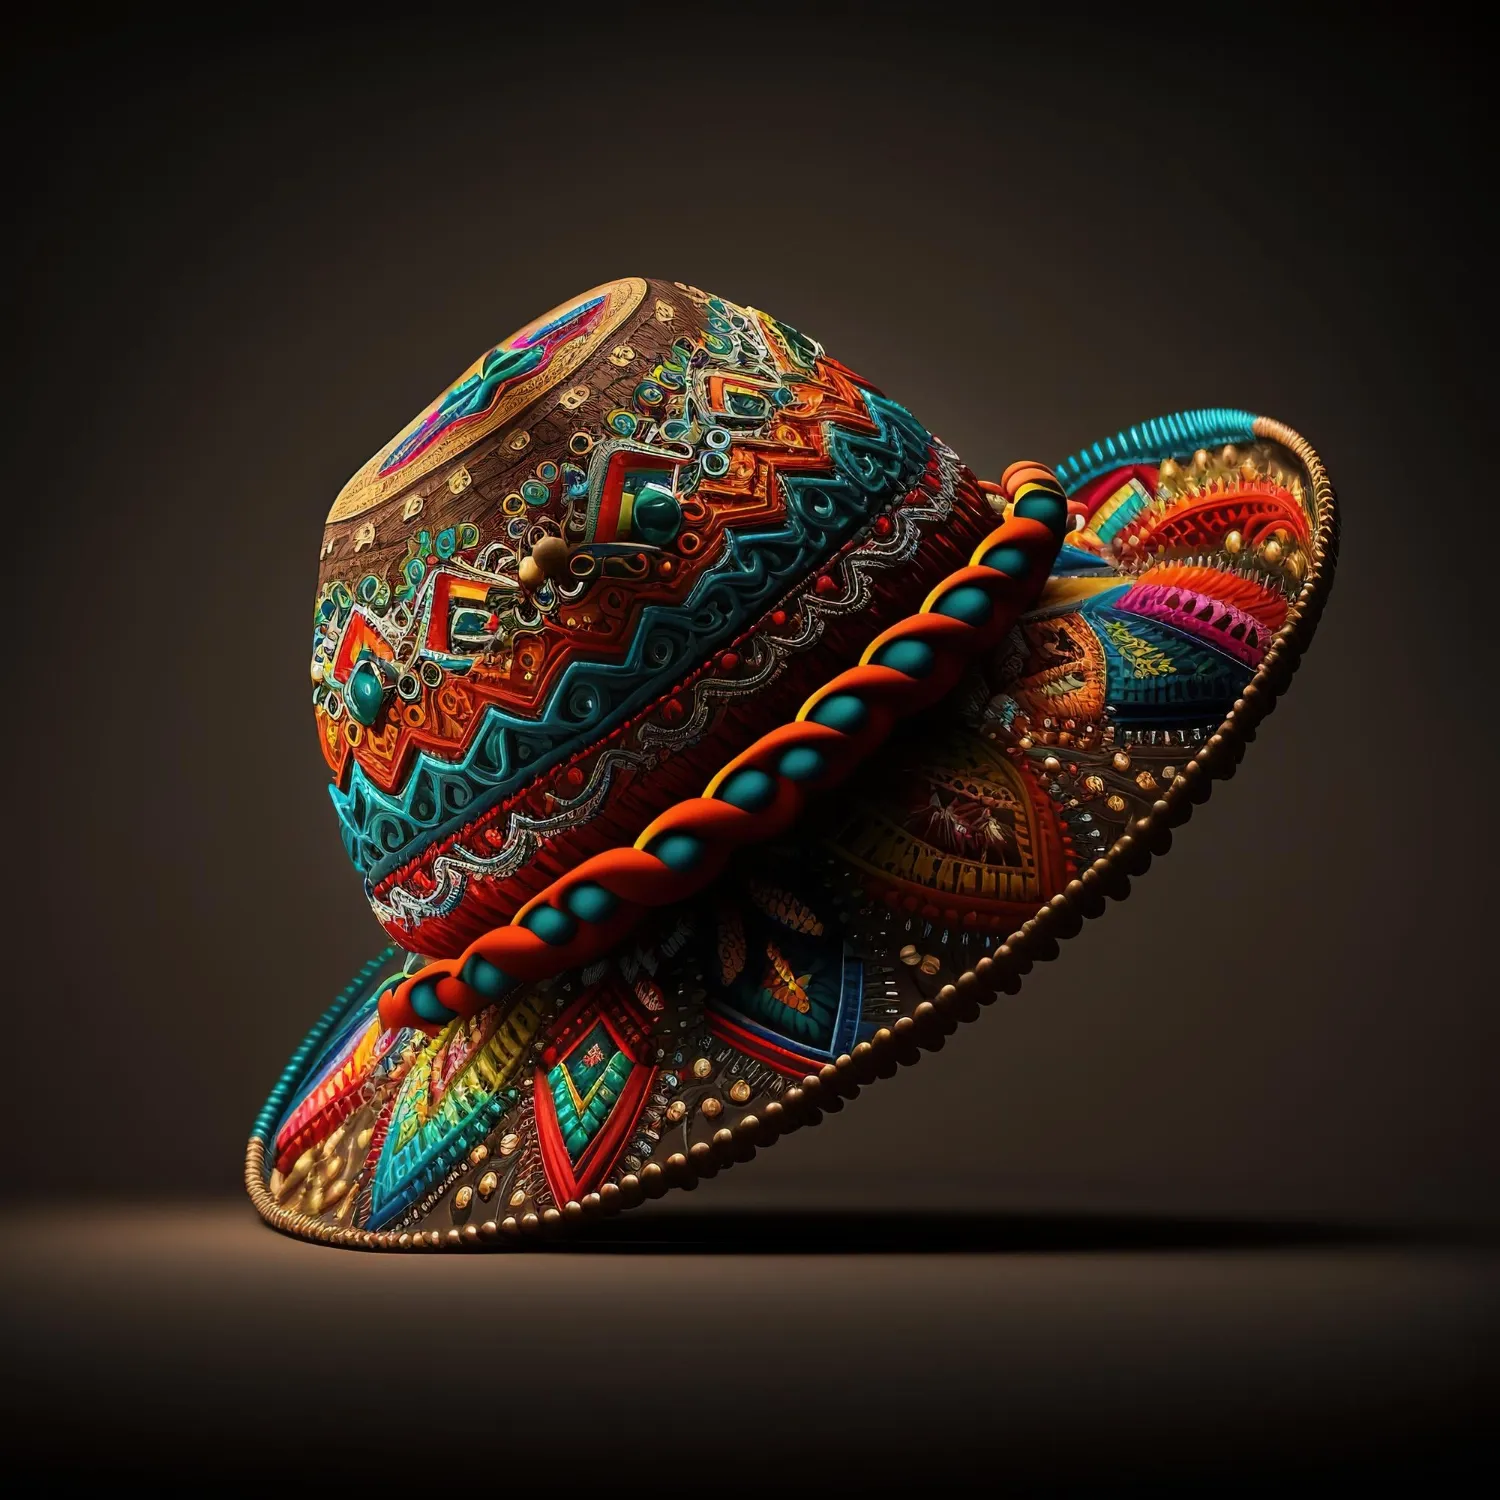 Sombrero realistic mexican hat 3d cinco de mayo festival holiday celebration object